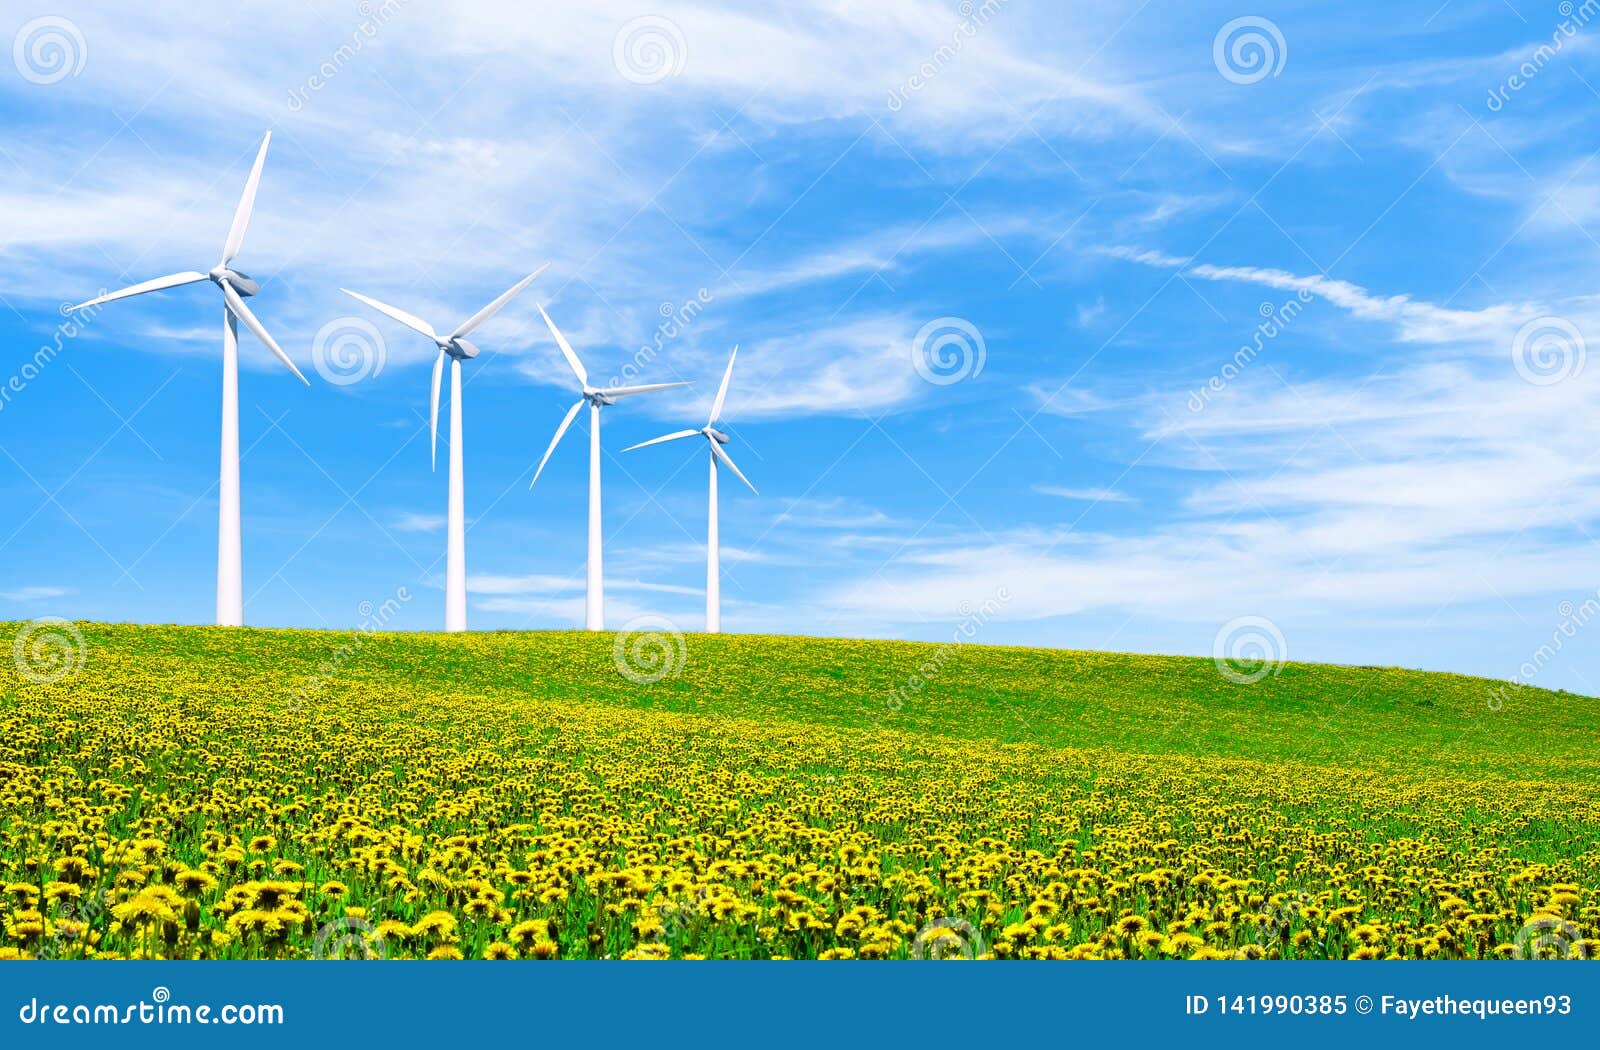 renewable energy with wind turbines. wind turbine in green hills.